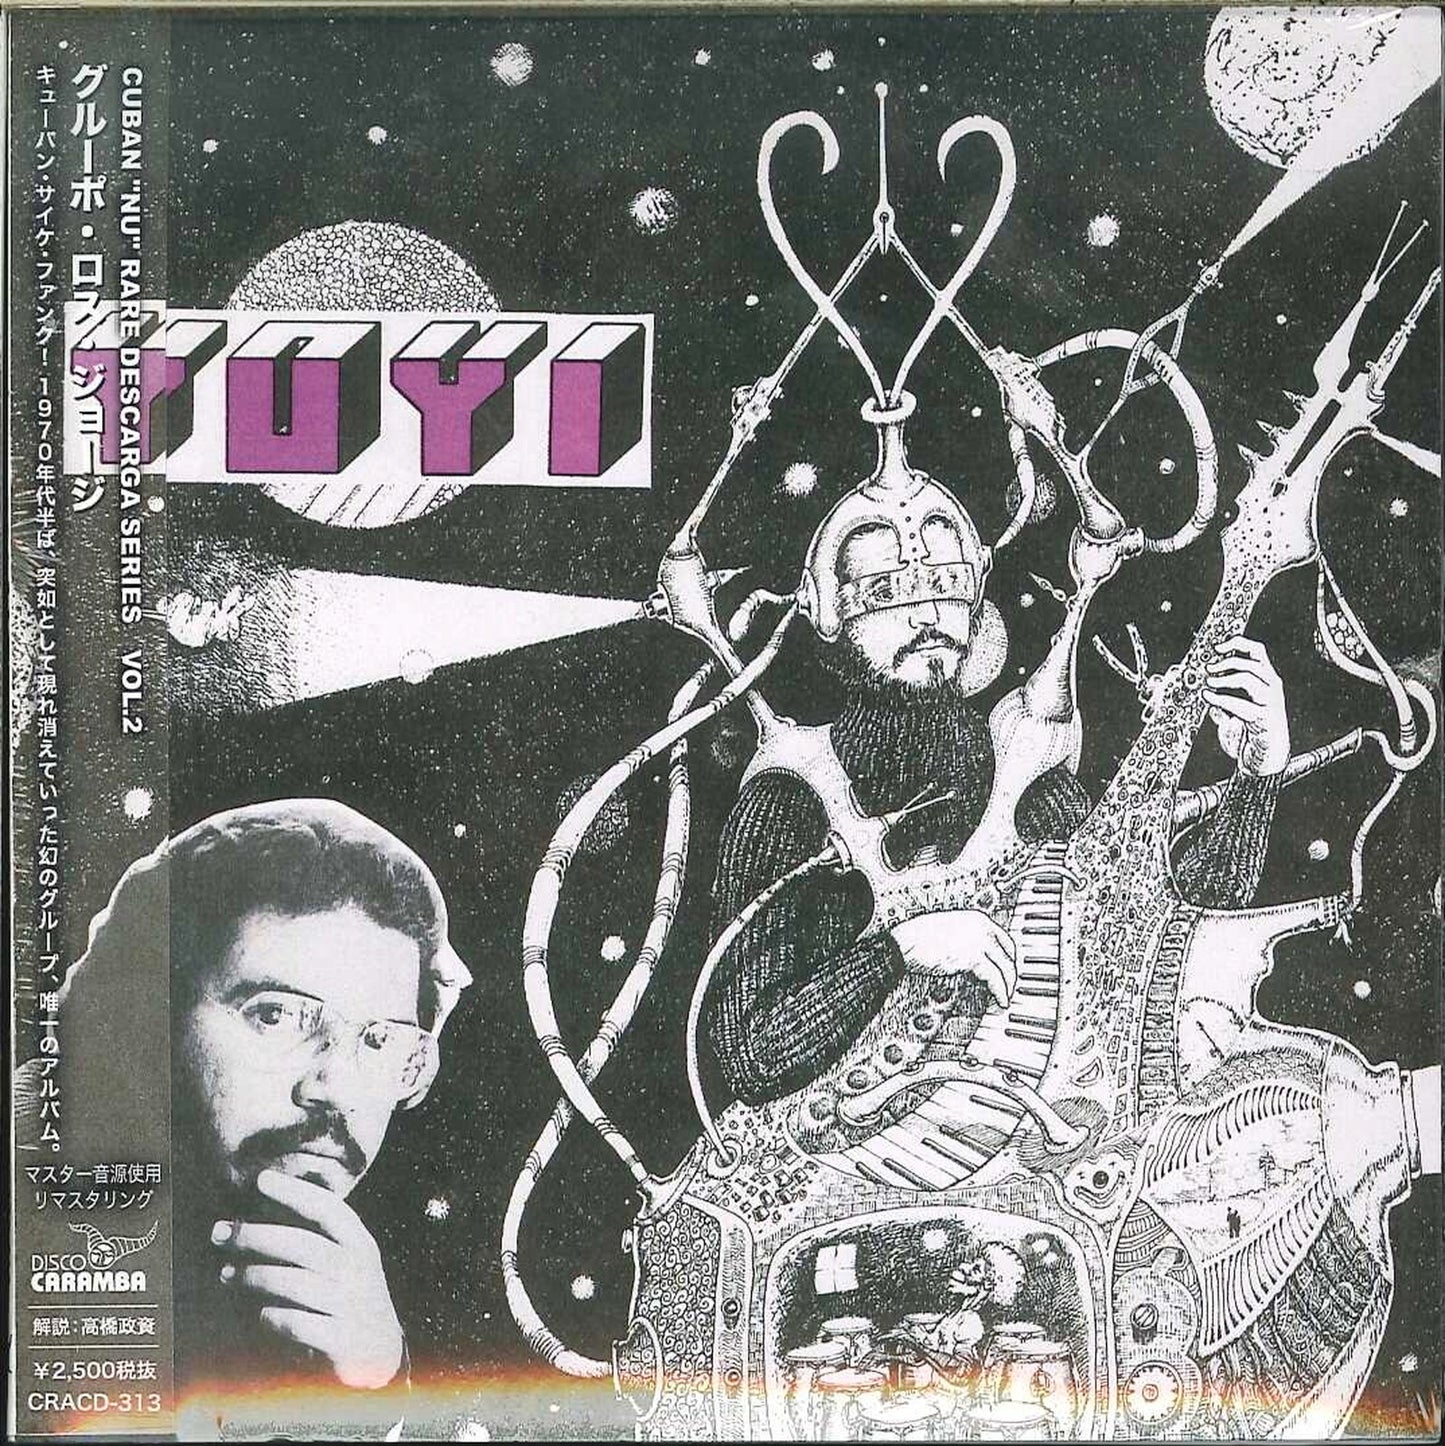 Grupo Los Yoyi - S/T - Japan CD